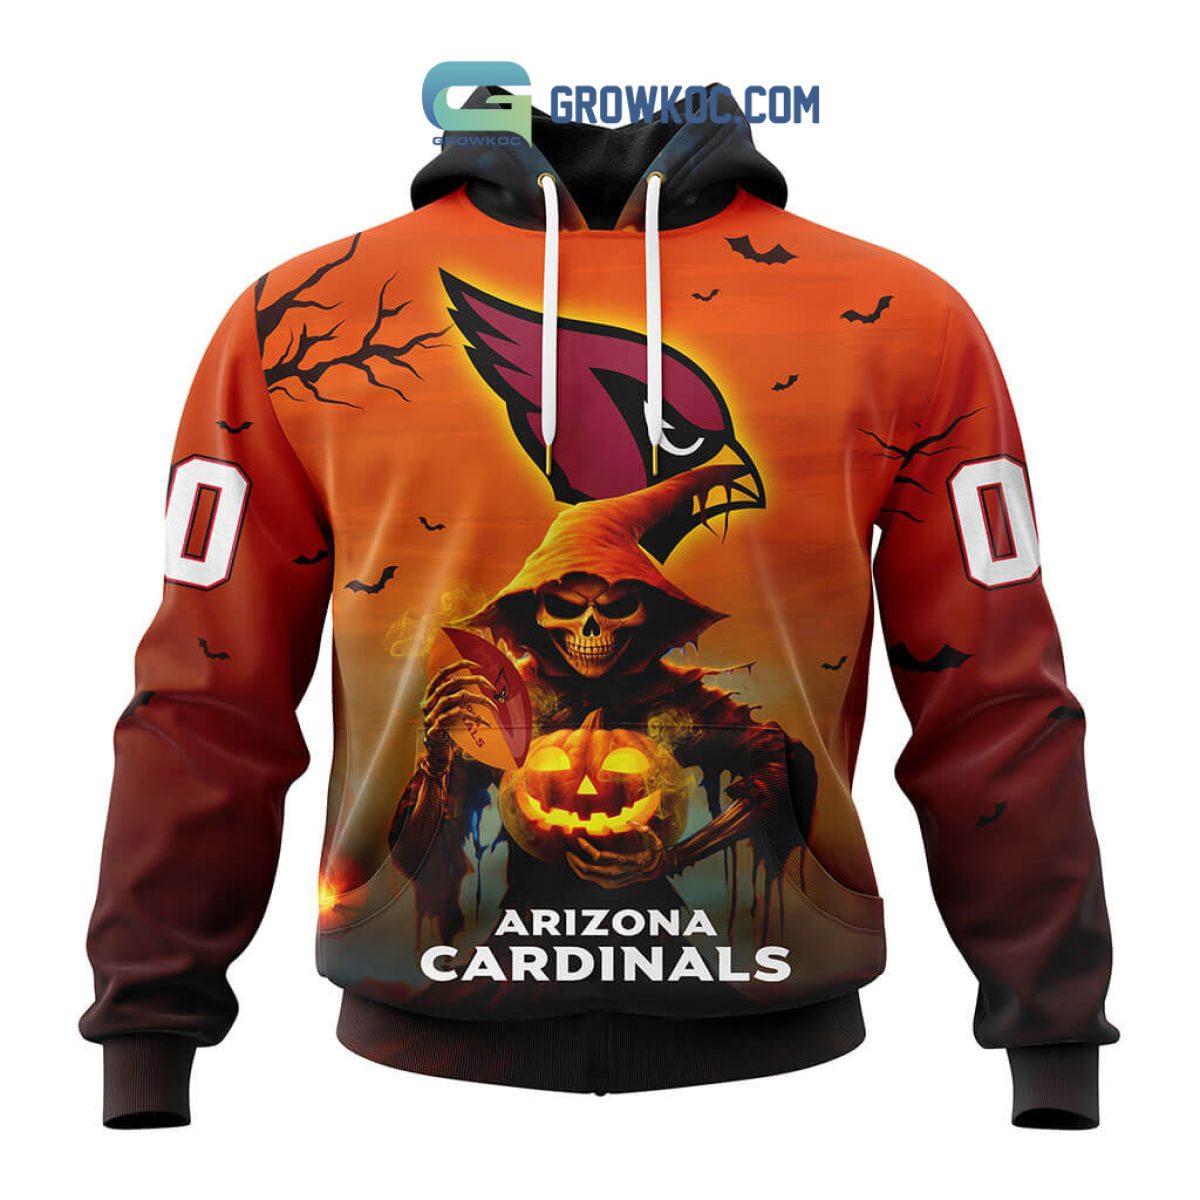 Arizona Cardinals NFL Personalized Home Jersey Hoodie T Shirt - Growkoc